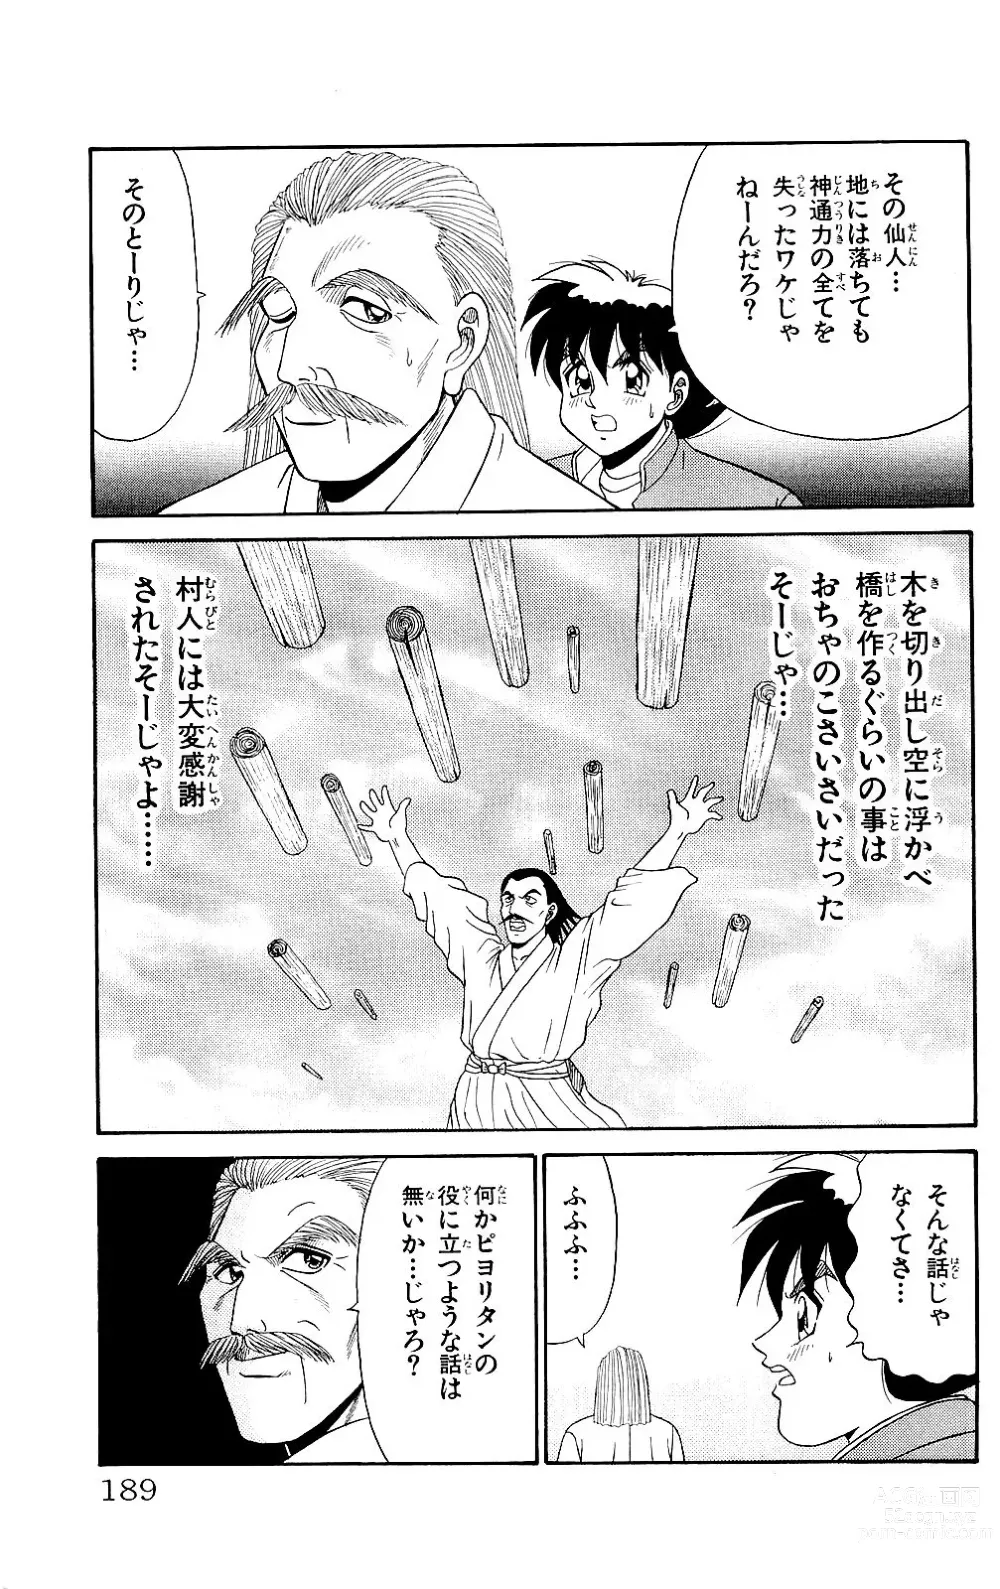 Page 187 of manga Orette Piyoritan 06